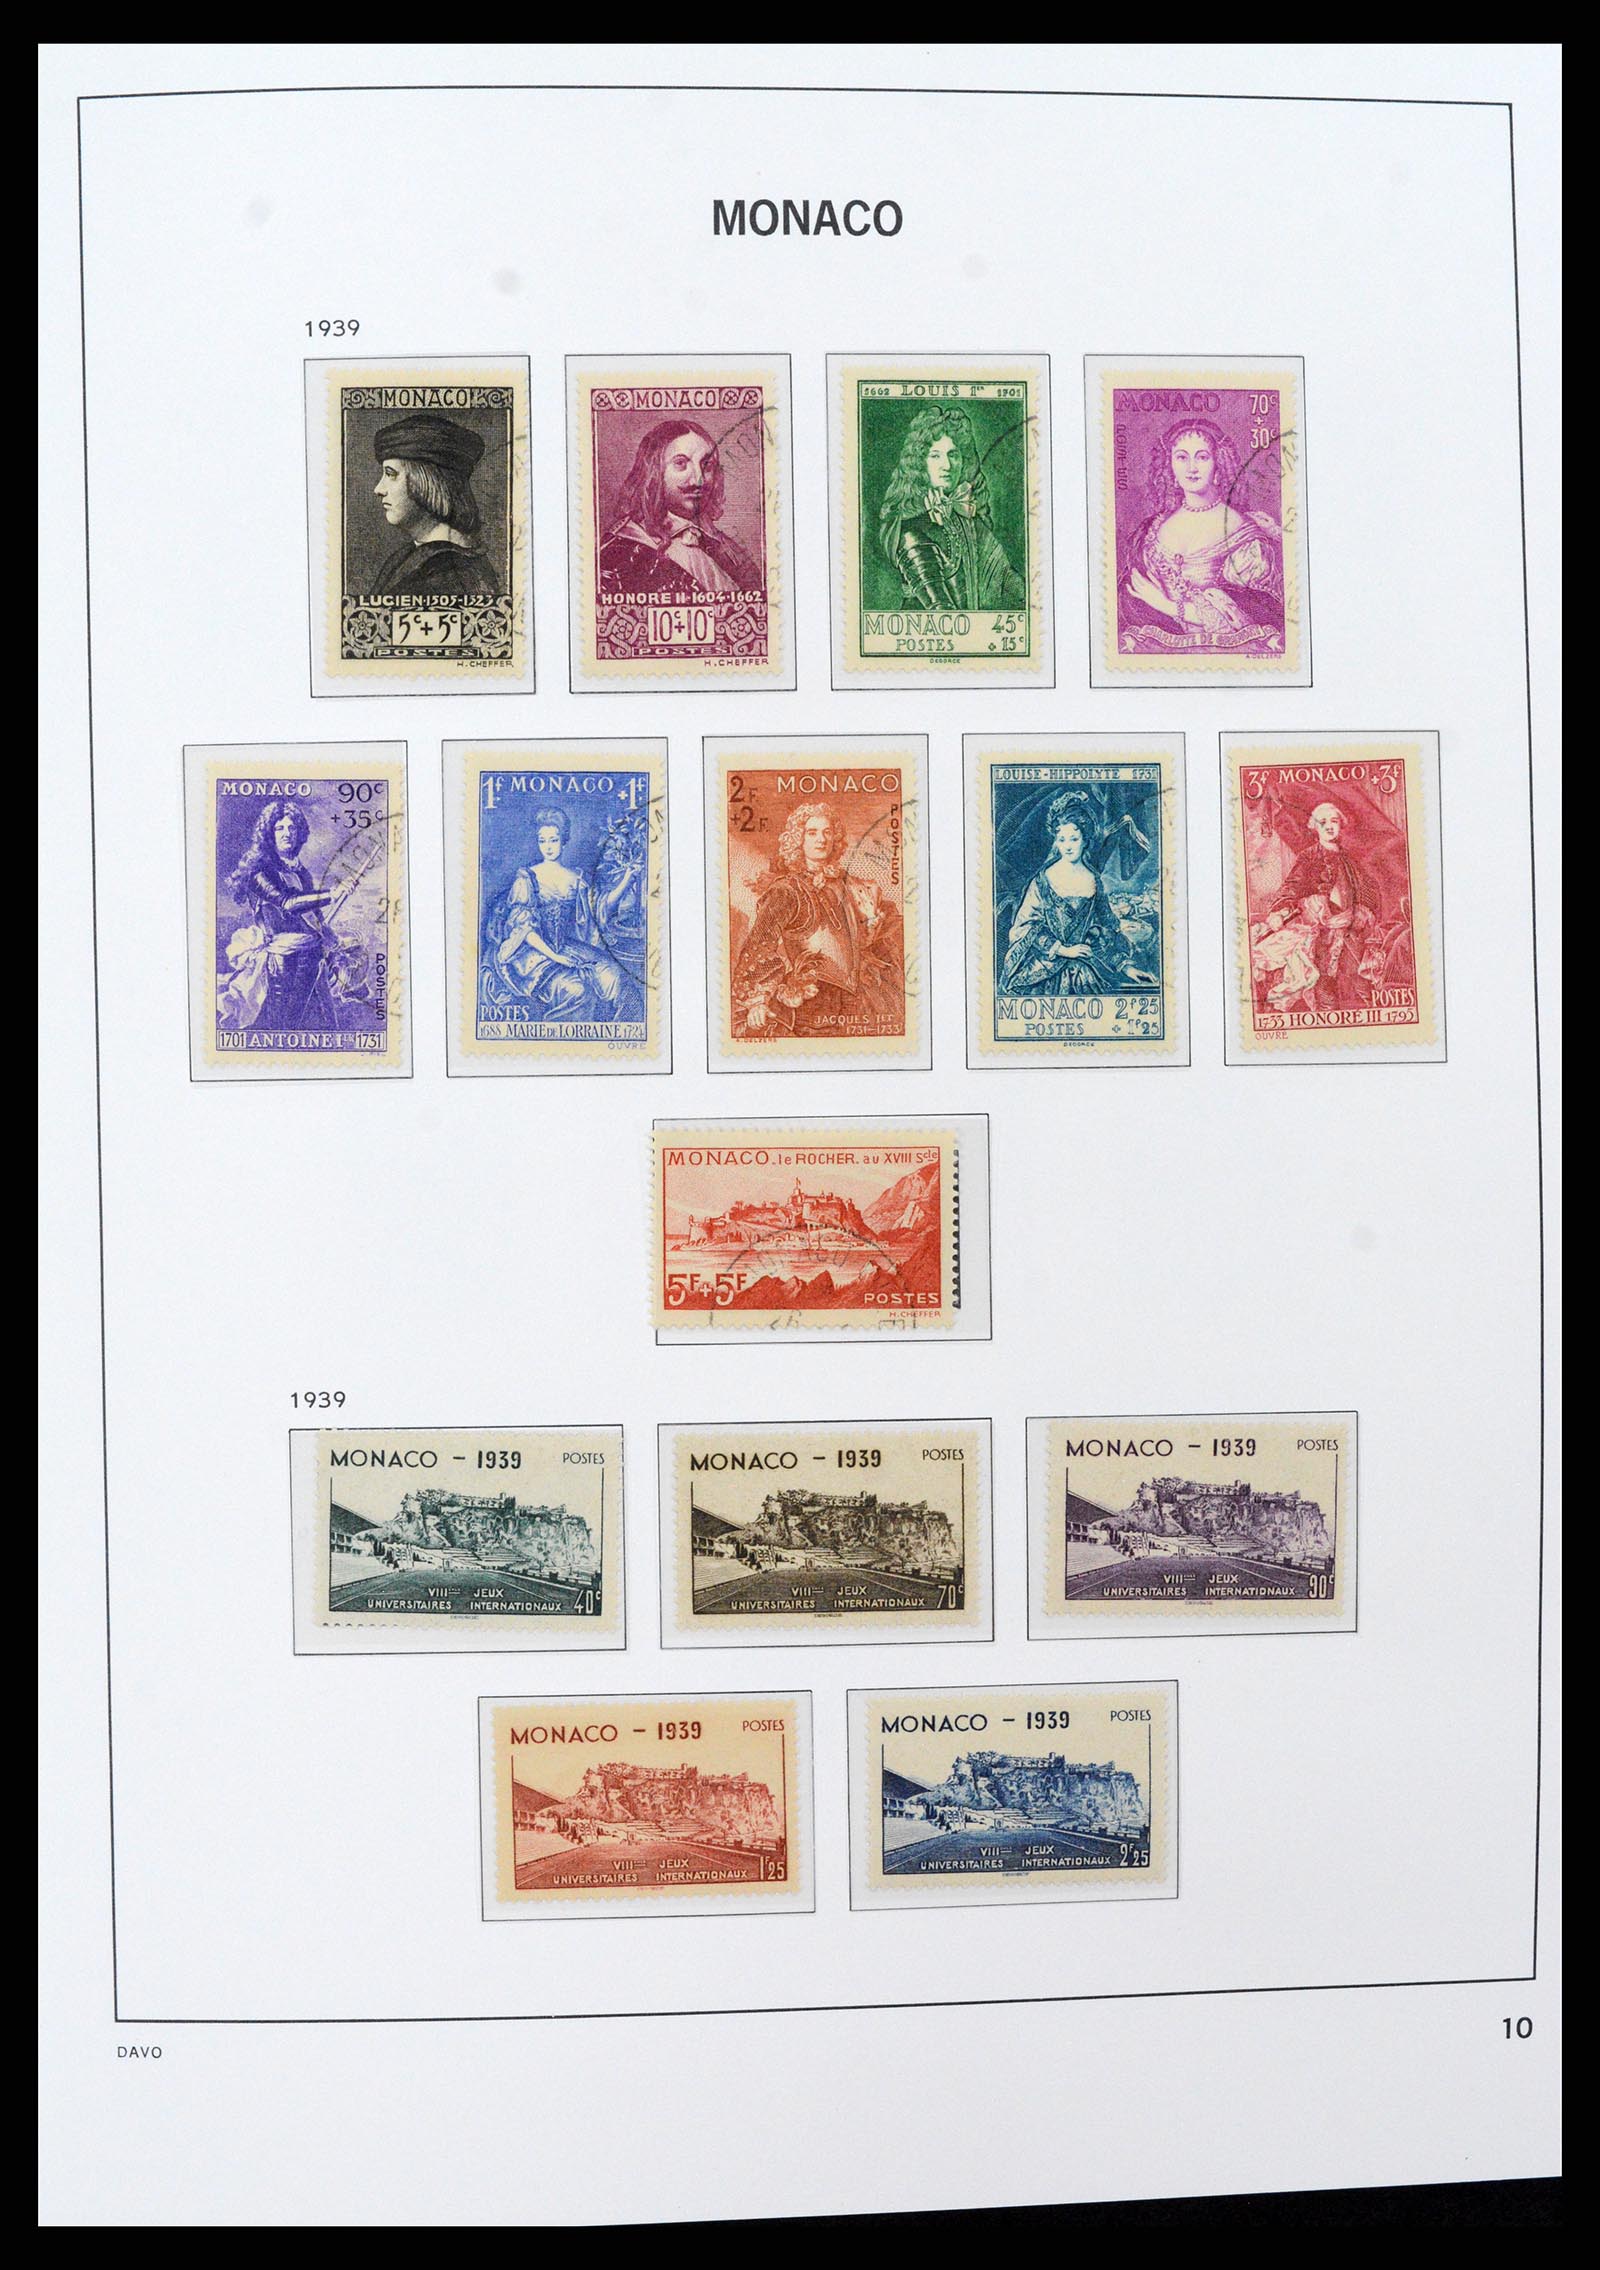 37279 010 - Stamp collection 37279 Monaco 1885-1969.